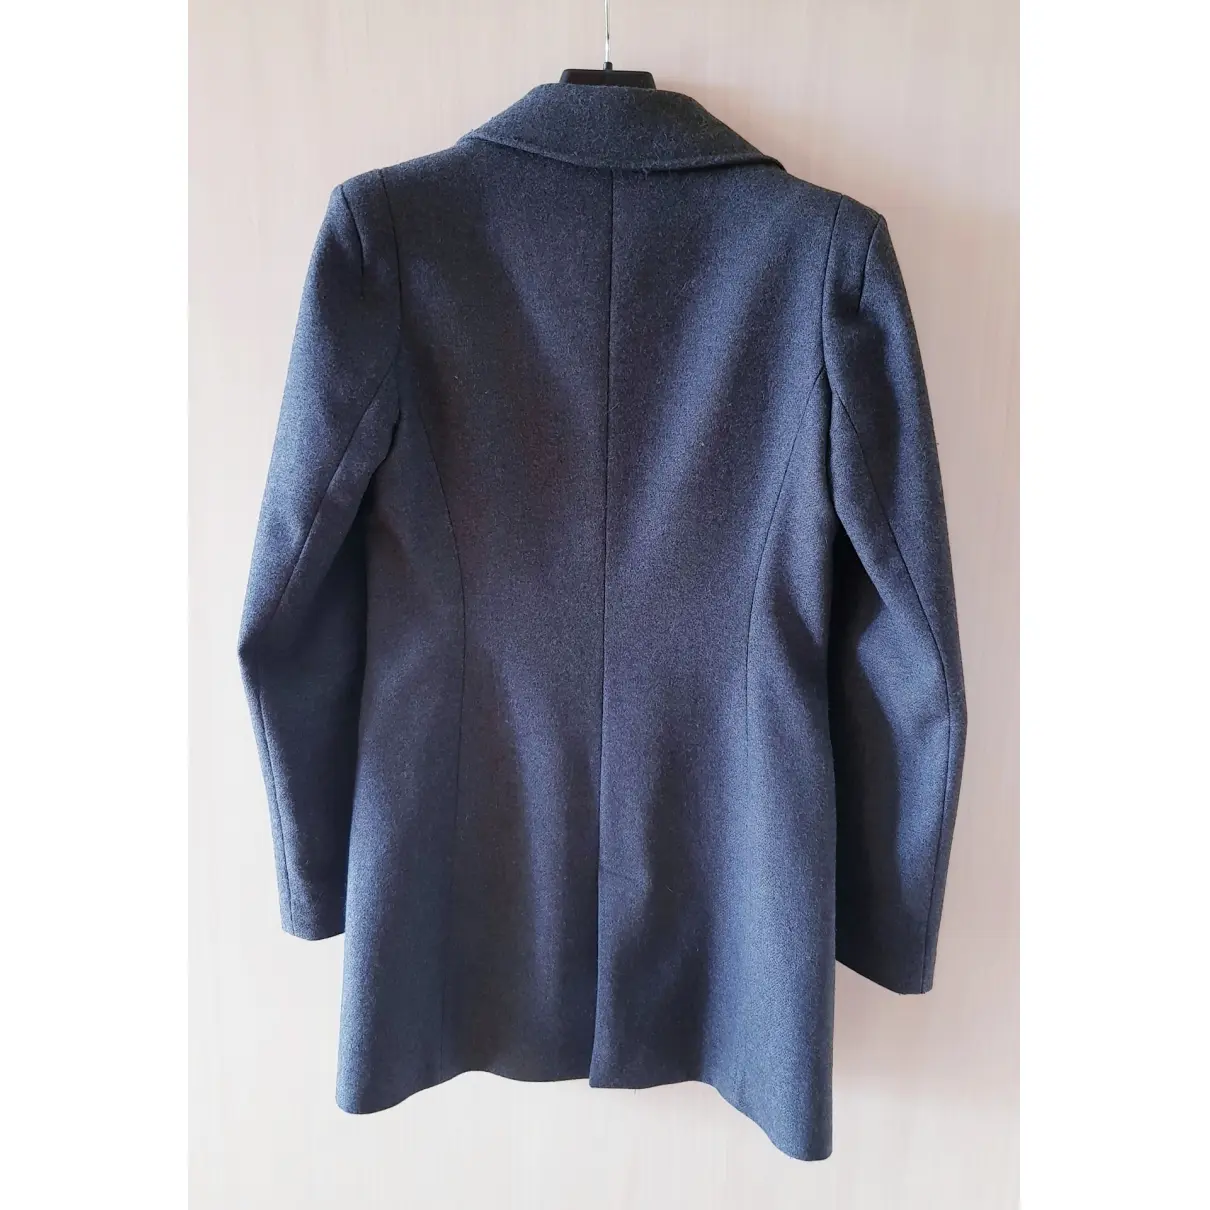 Buy STRADIVARIUS Wool coat online